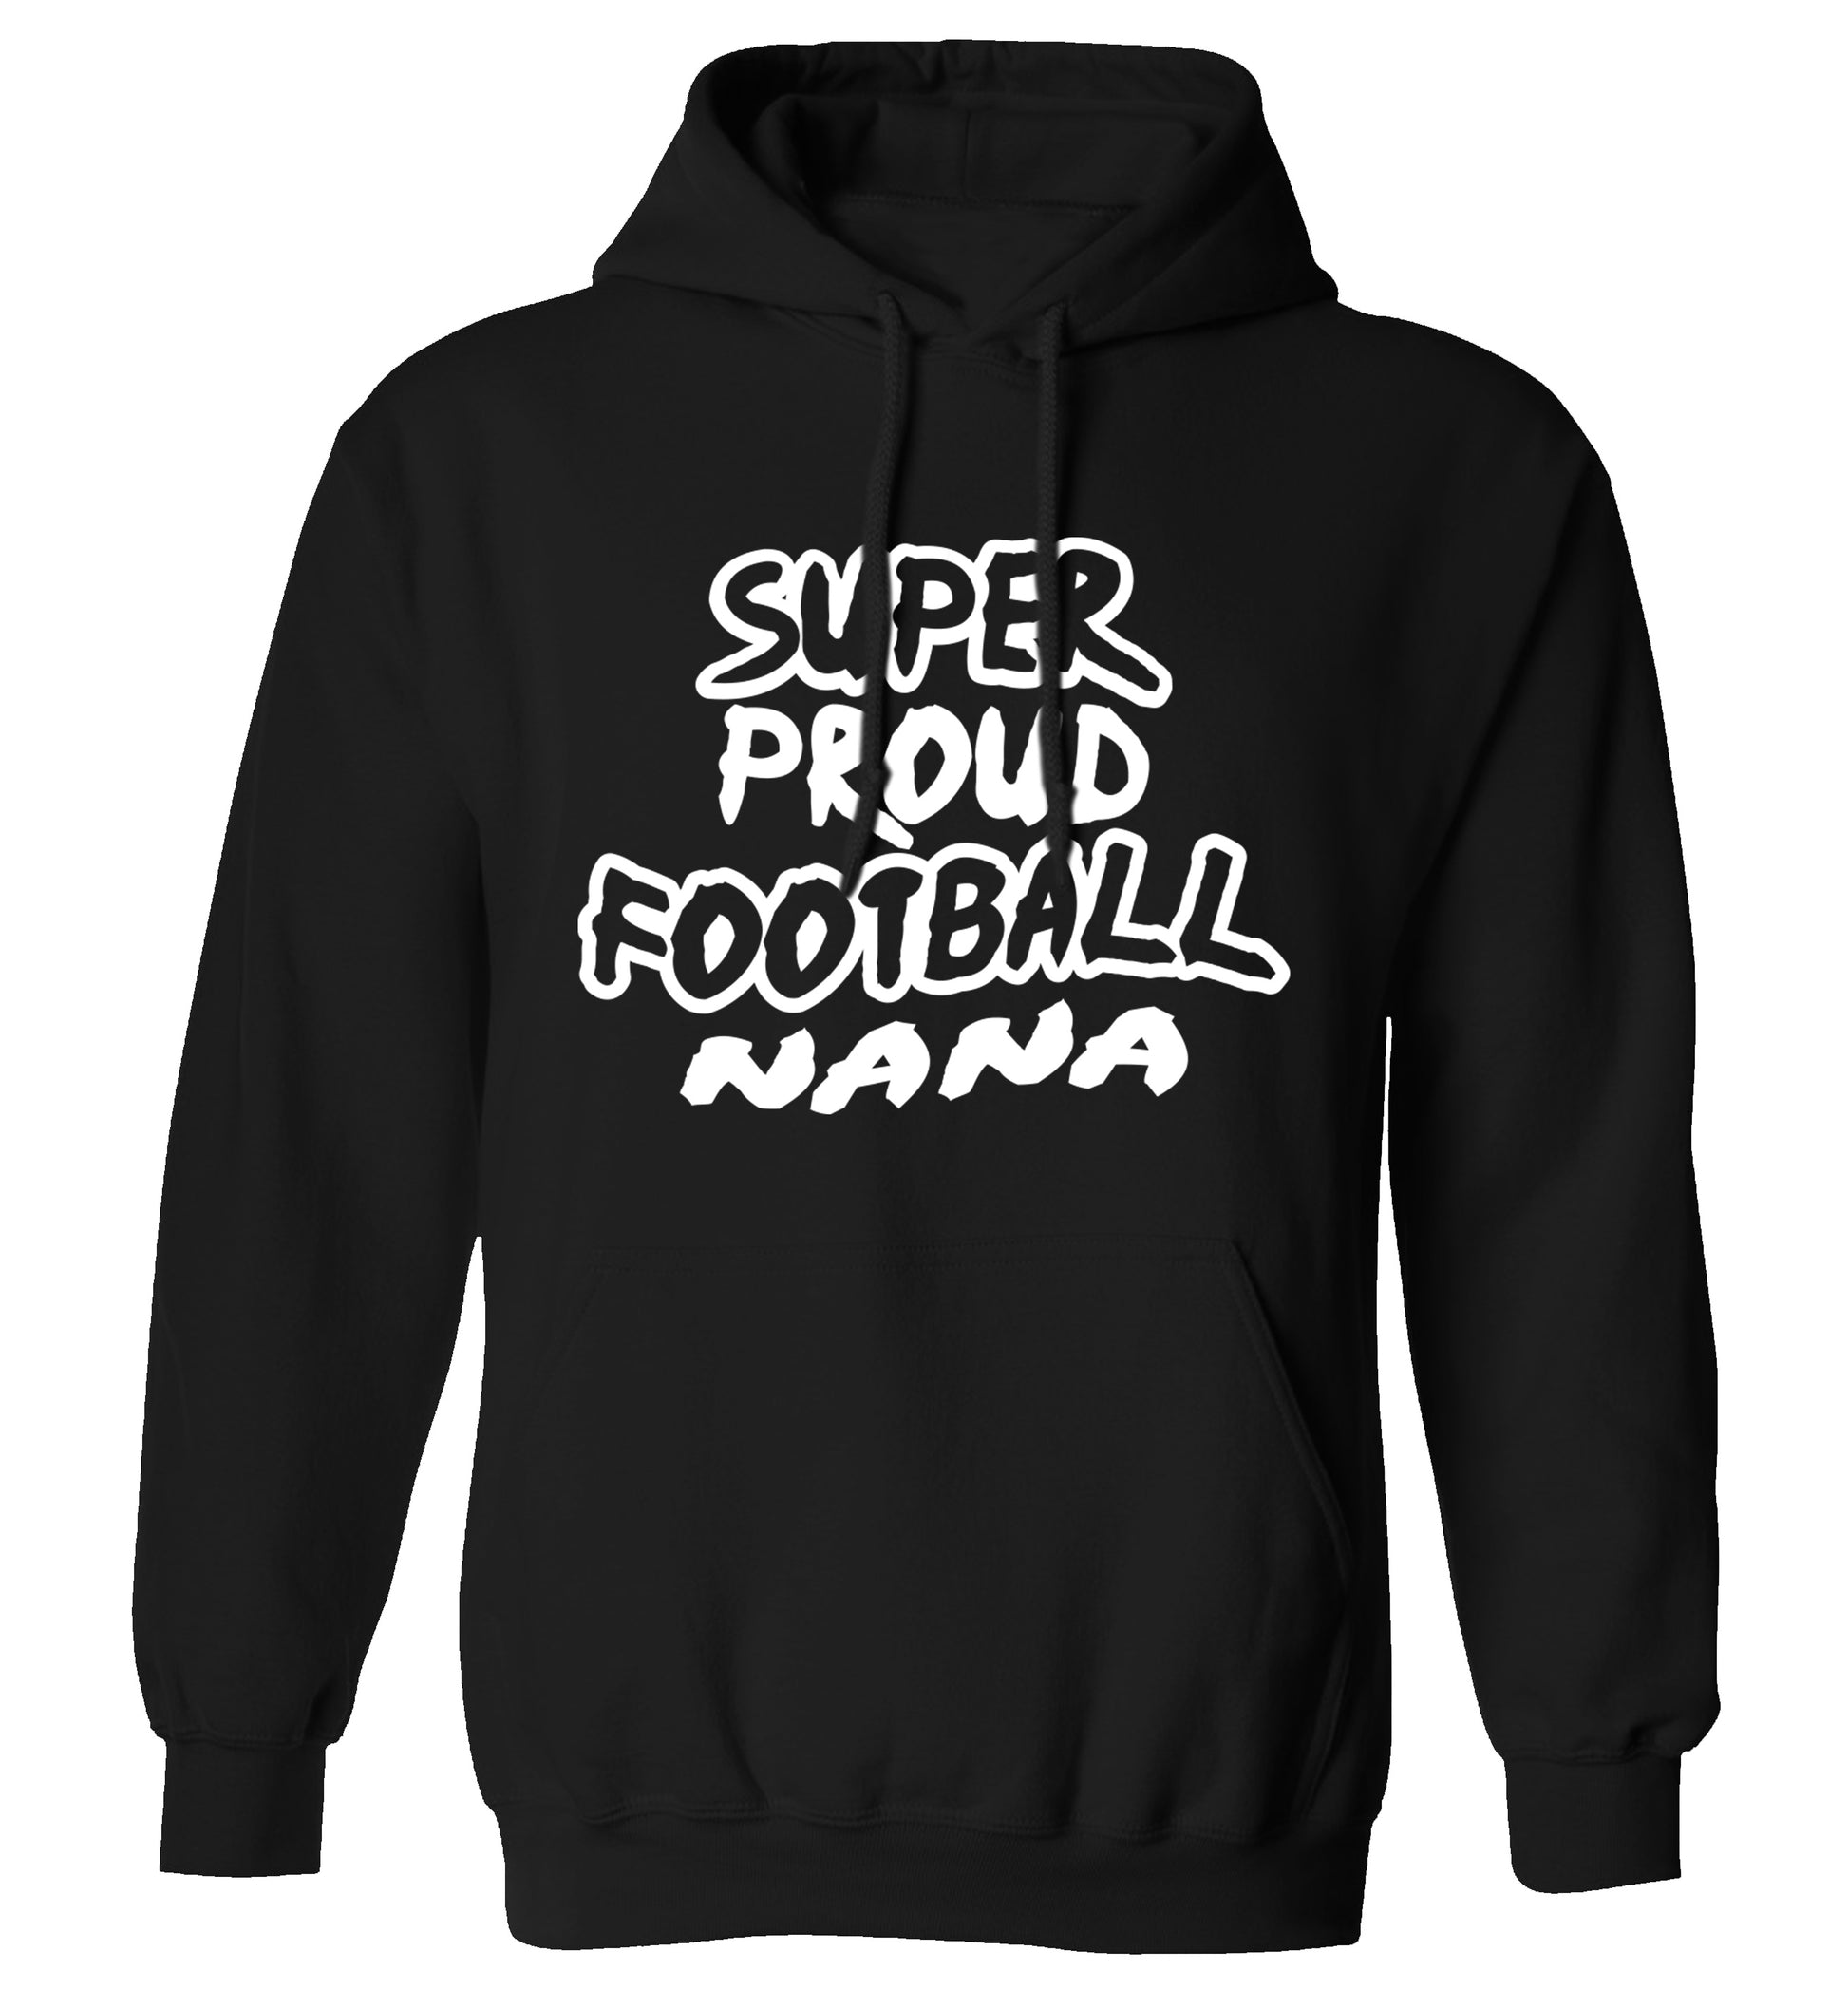 Super proud football nana adults unisexblack hoodie 2XL